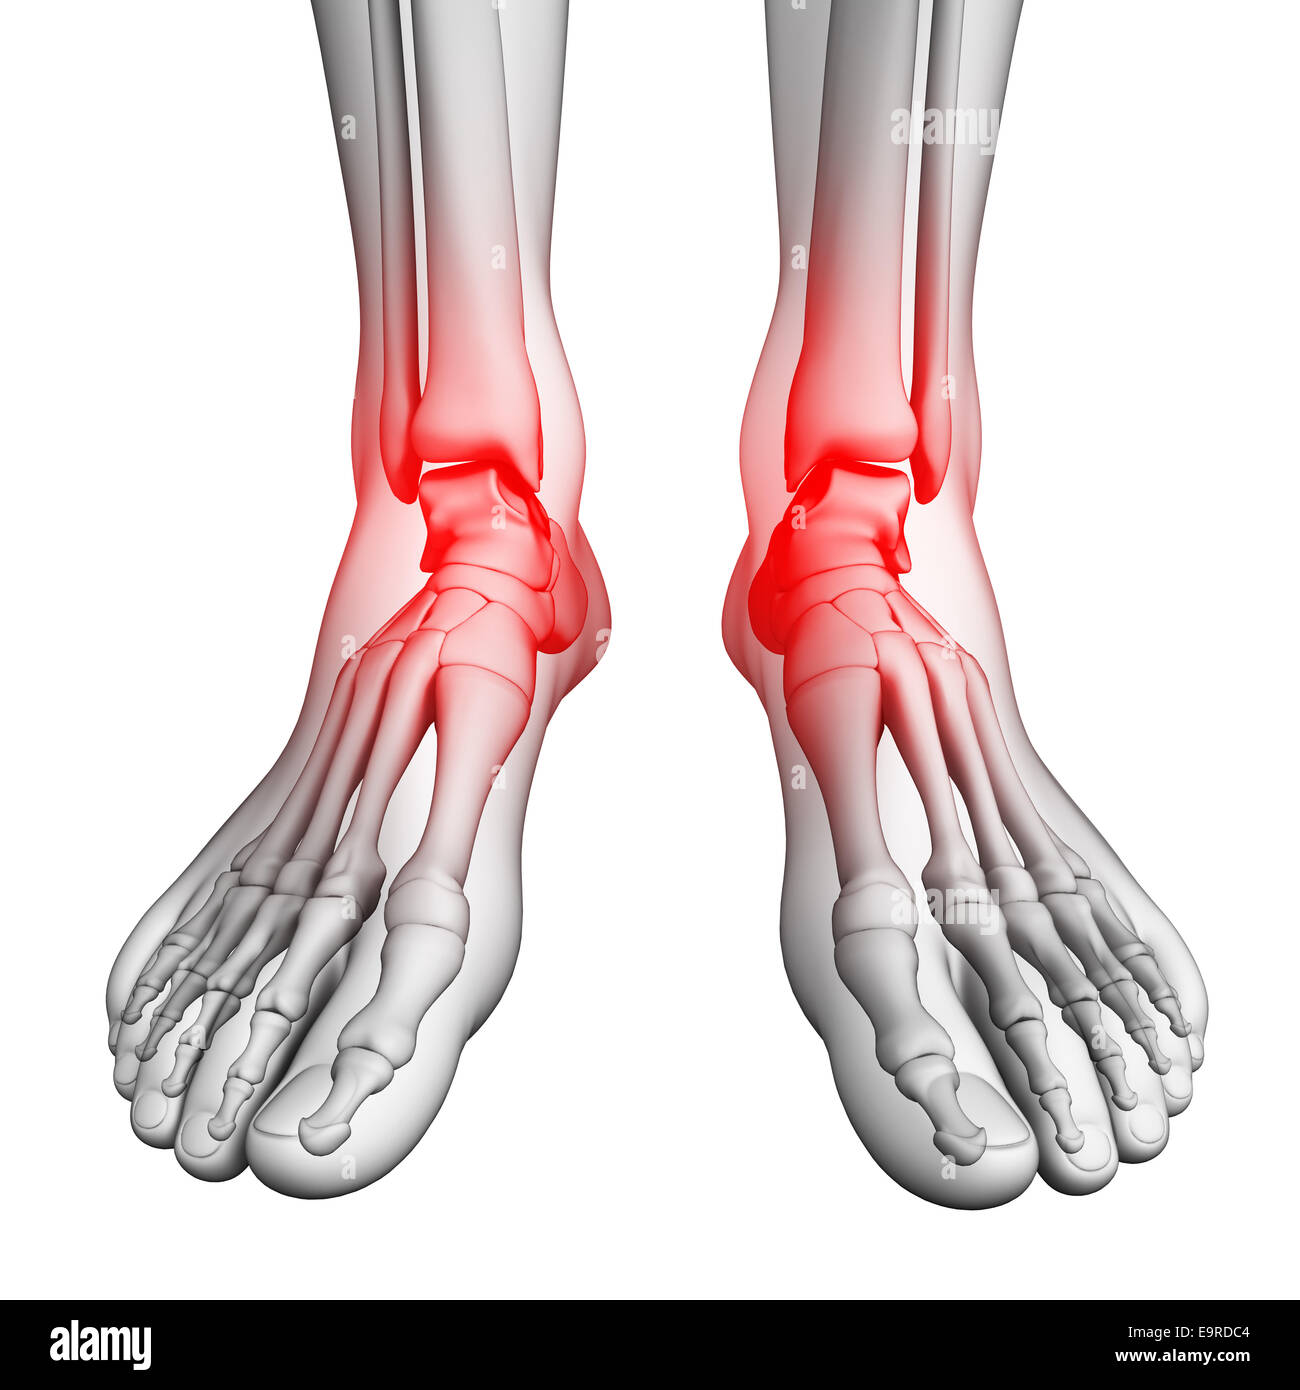 Illustration of foot pain artwork Stock Photo